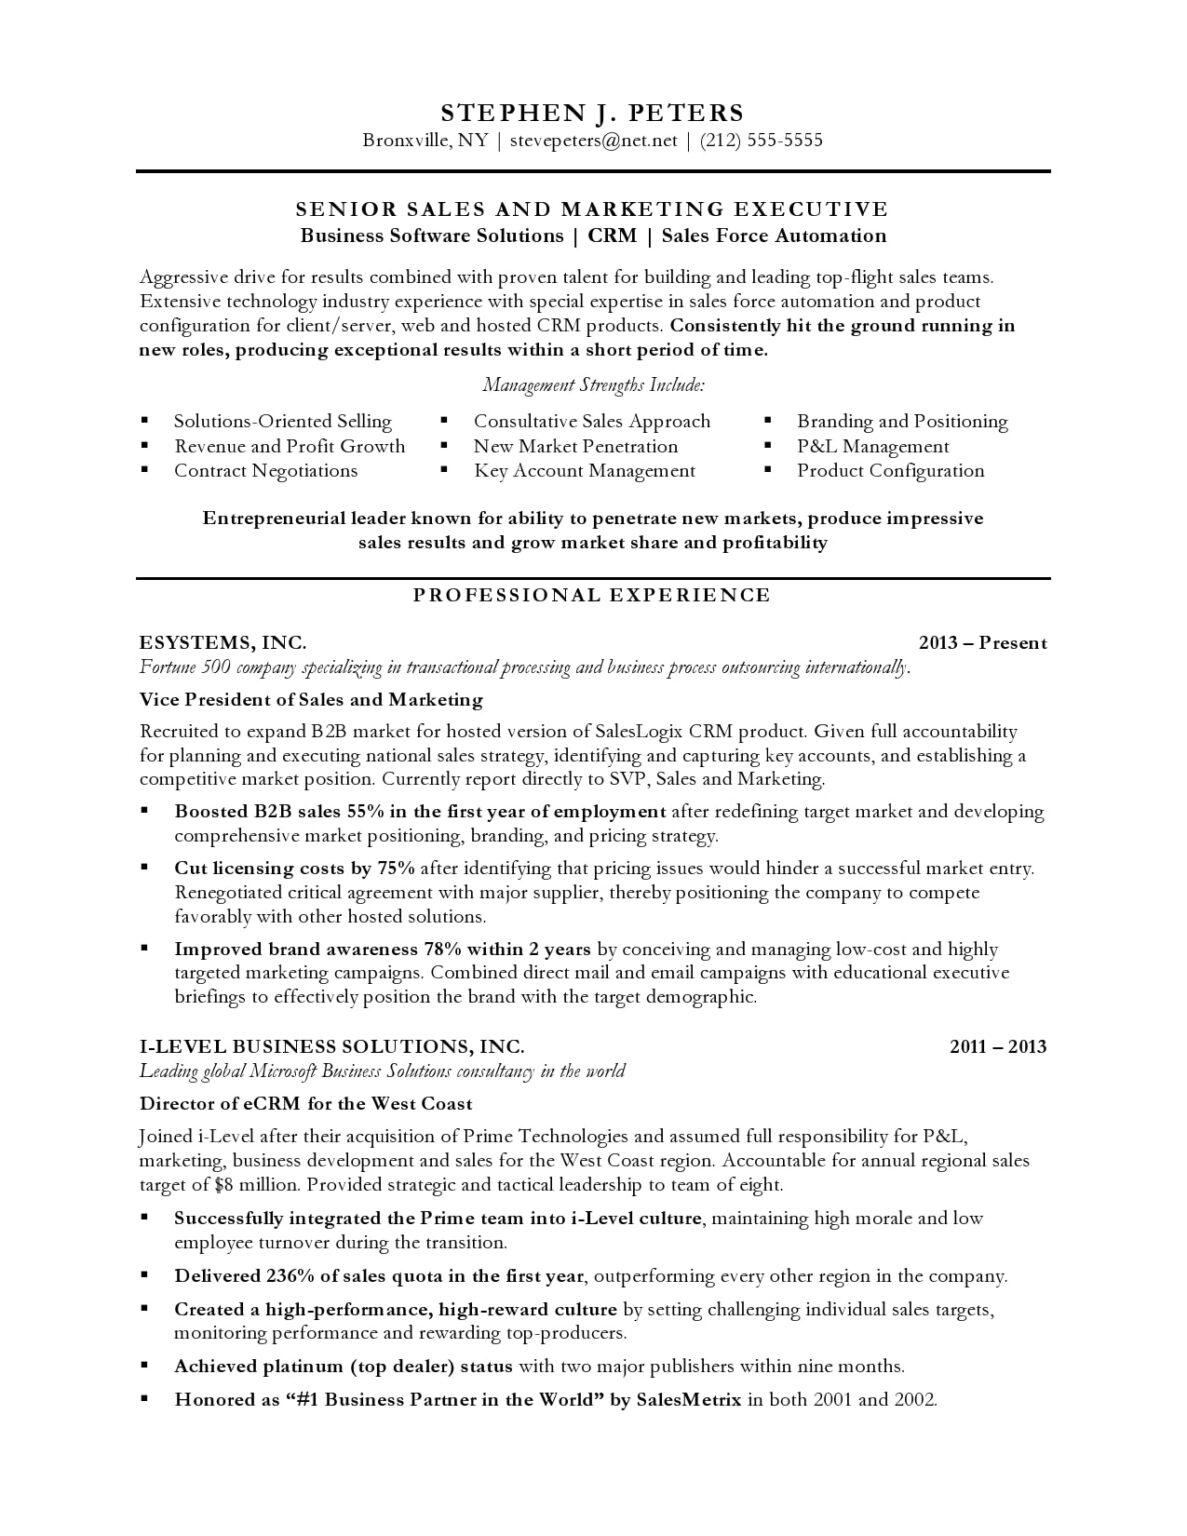 sales-executive-resume-sample-blue-sky-resumes